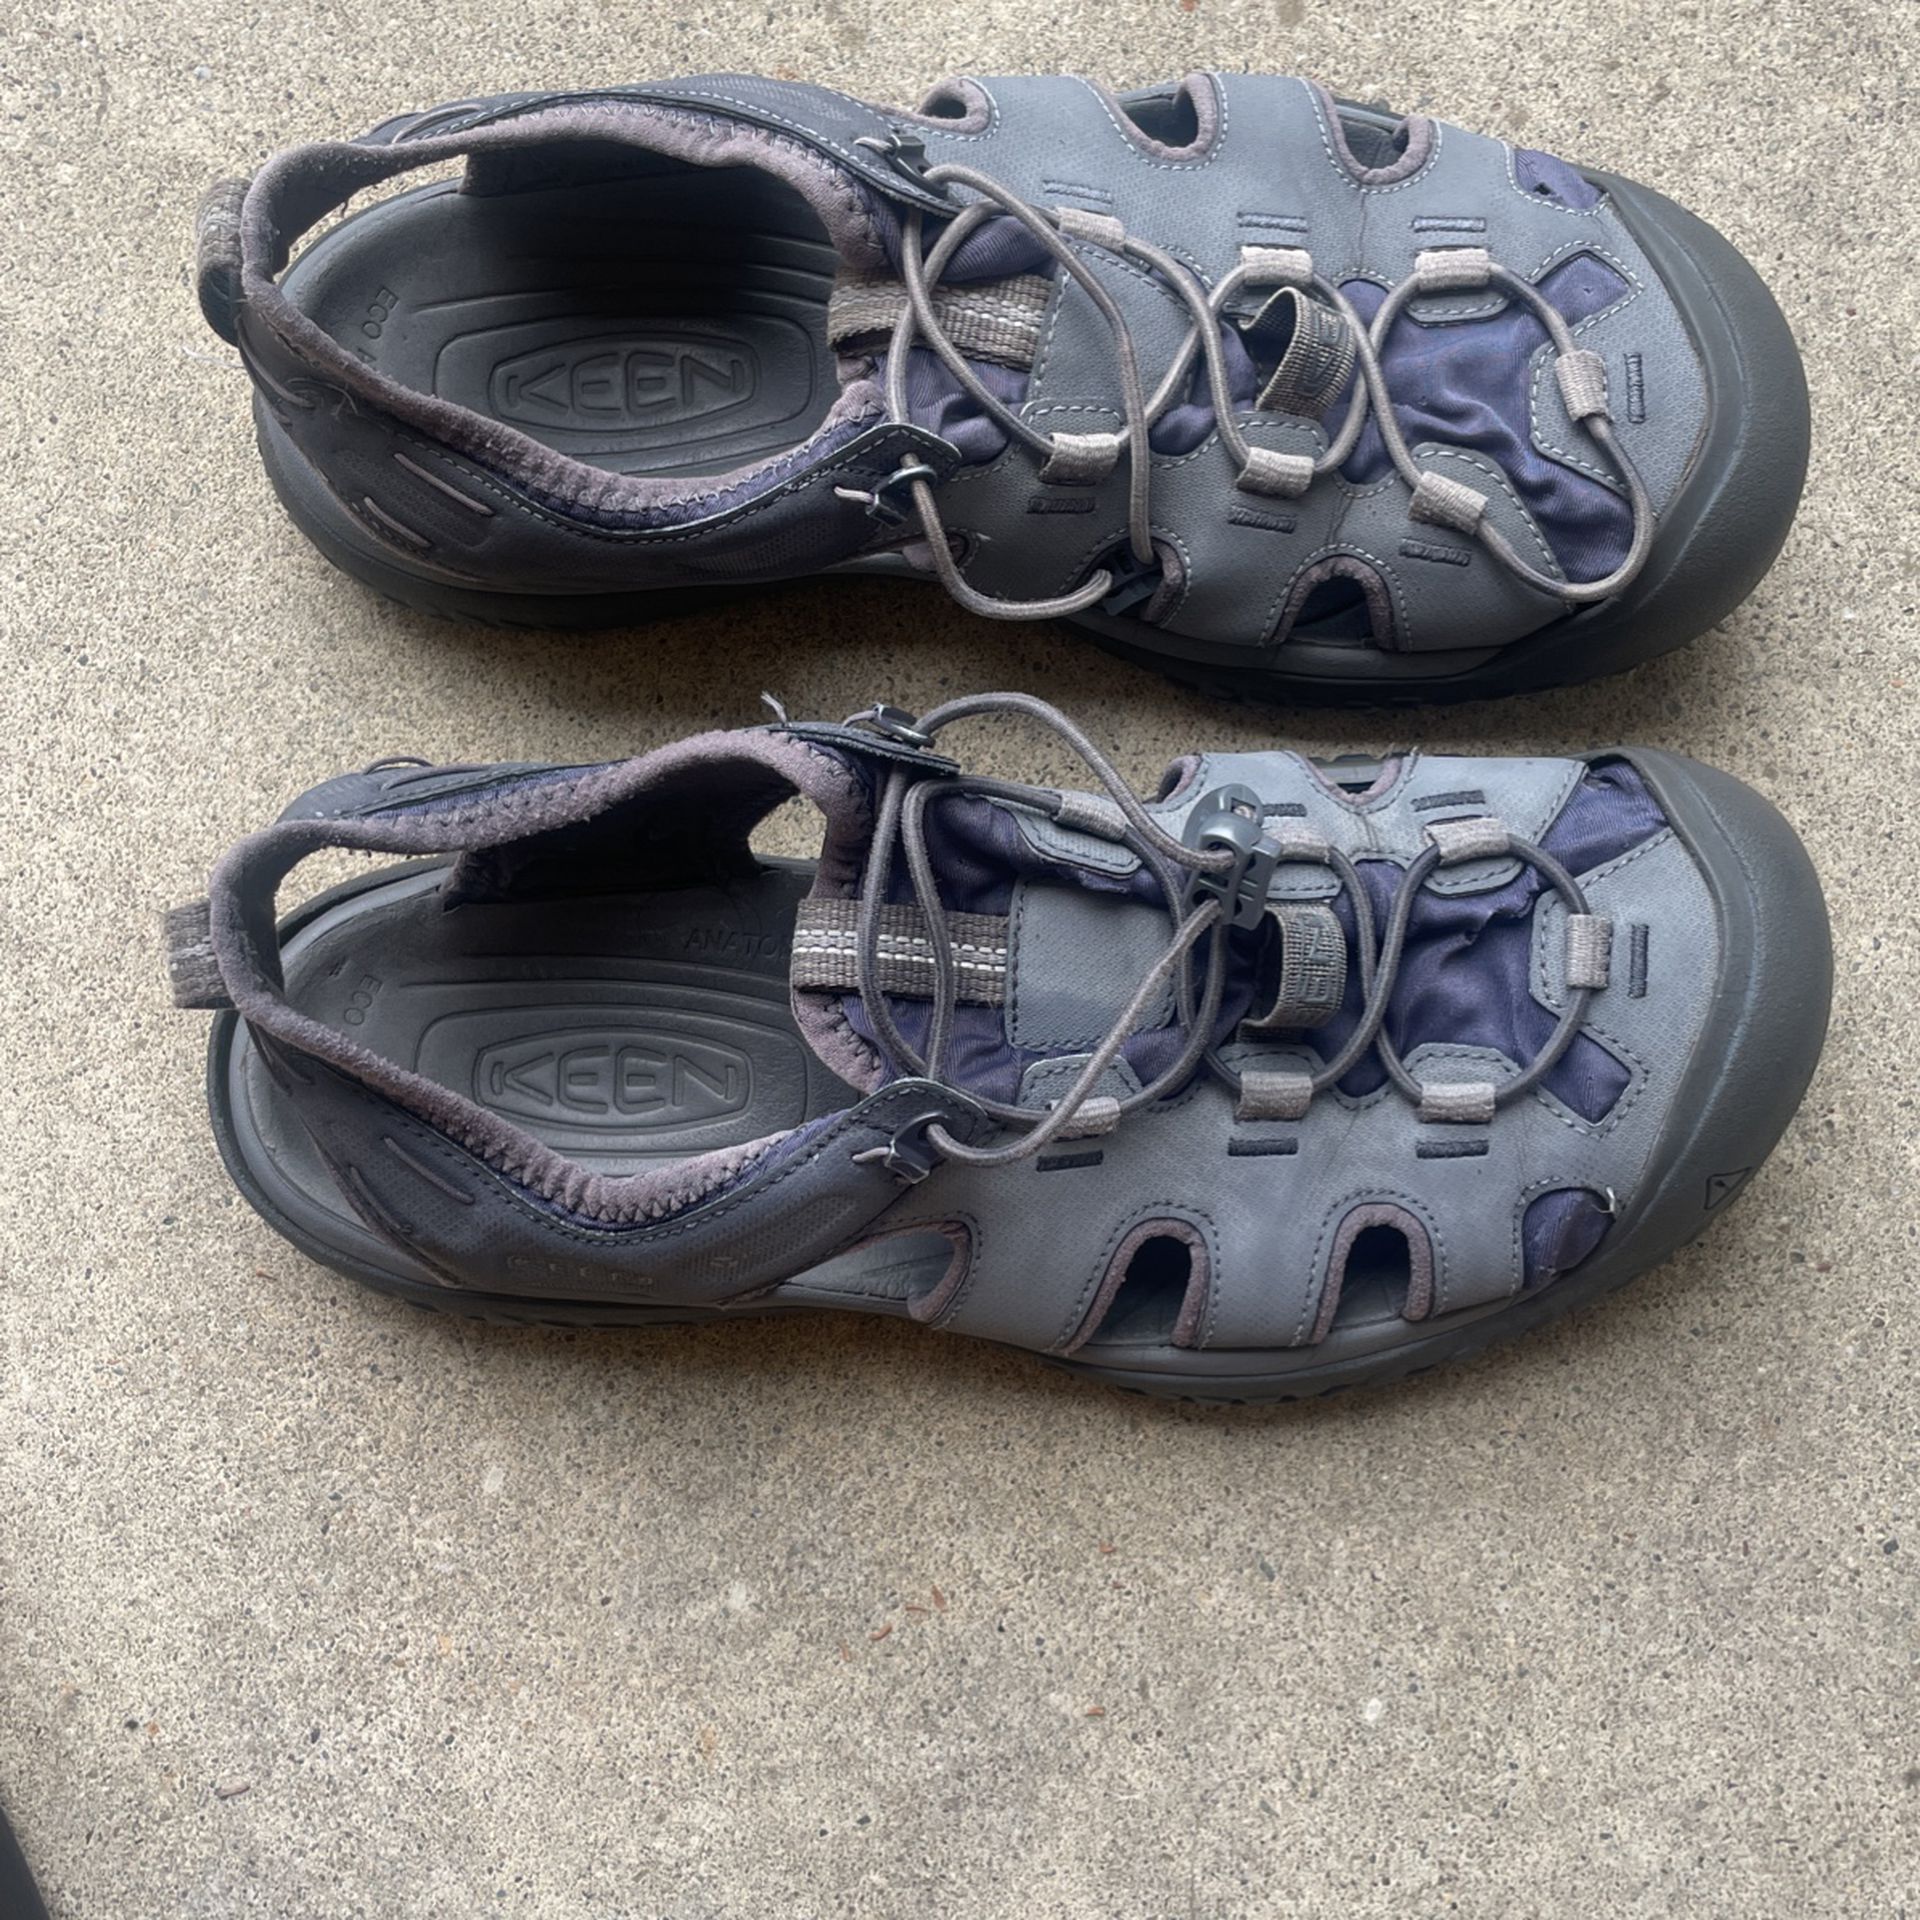 Keen Sandals Men Grey Size 10.5 